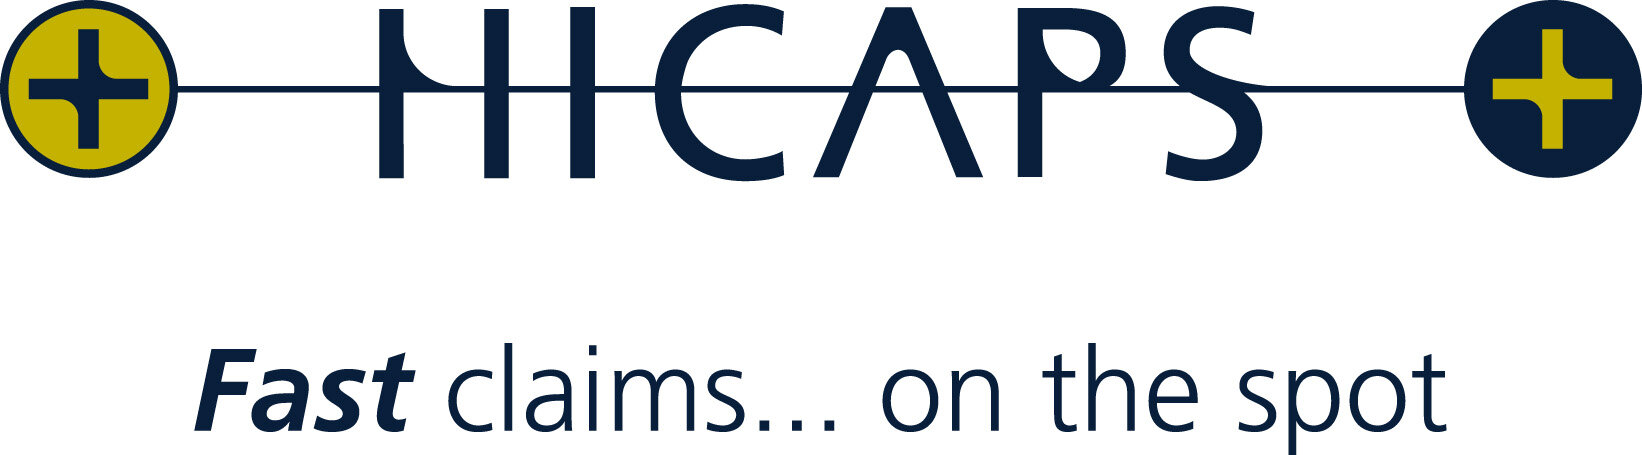 HICAPS-Logo.jpg